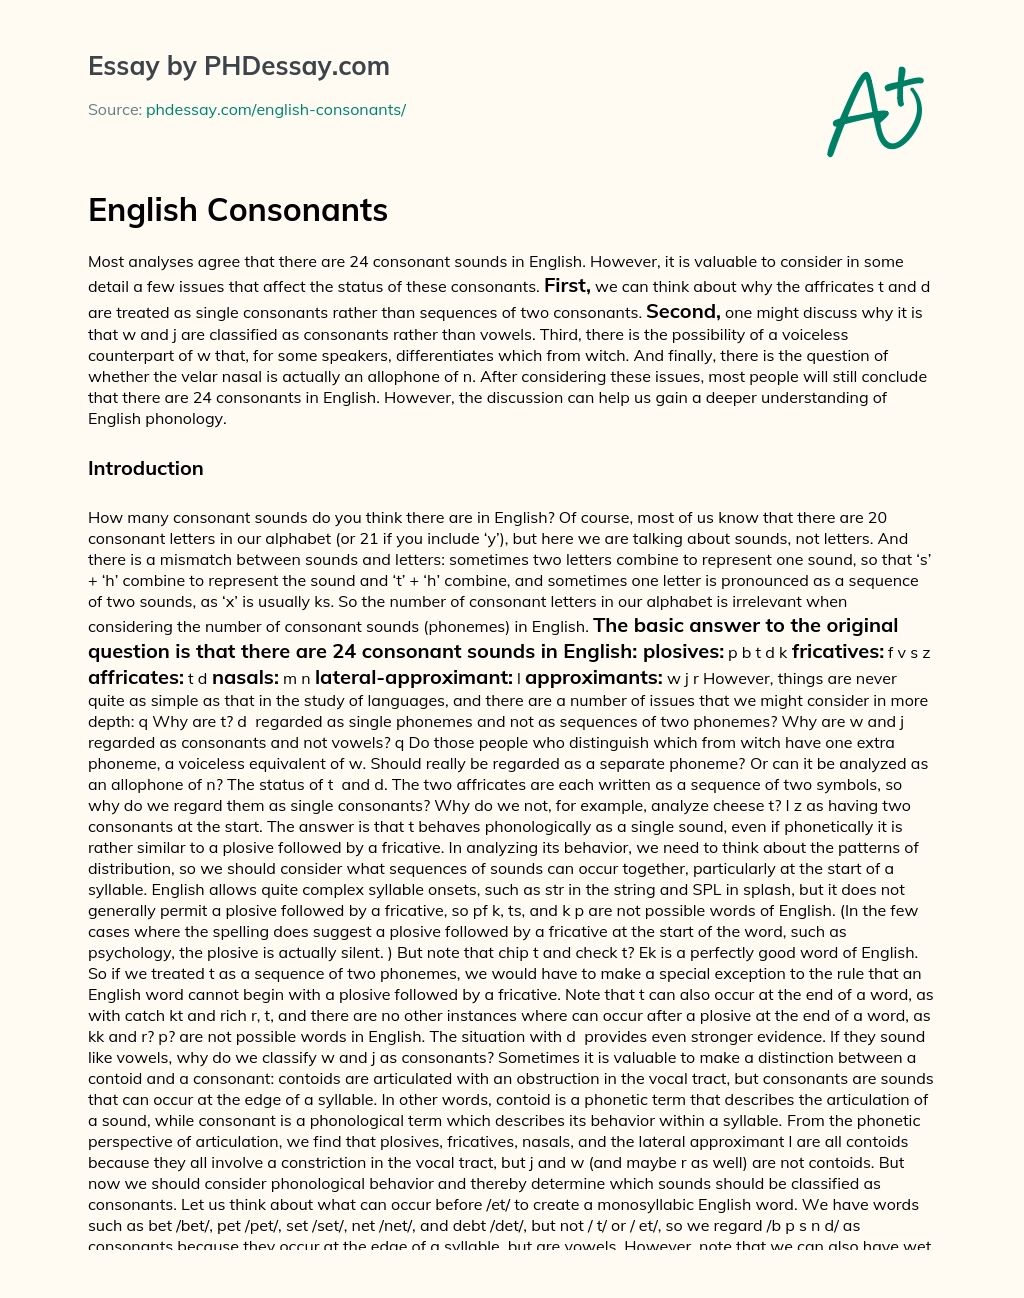 English Consonants essay